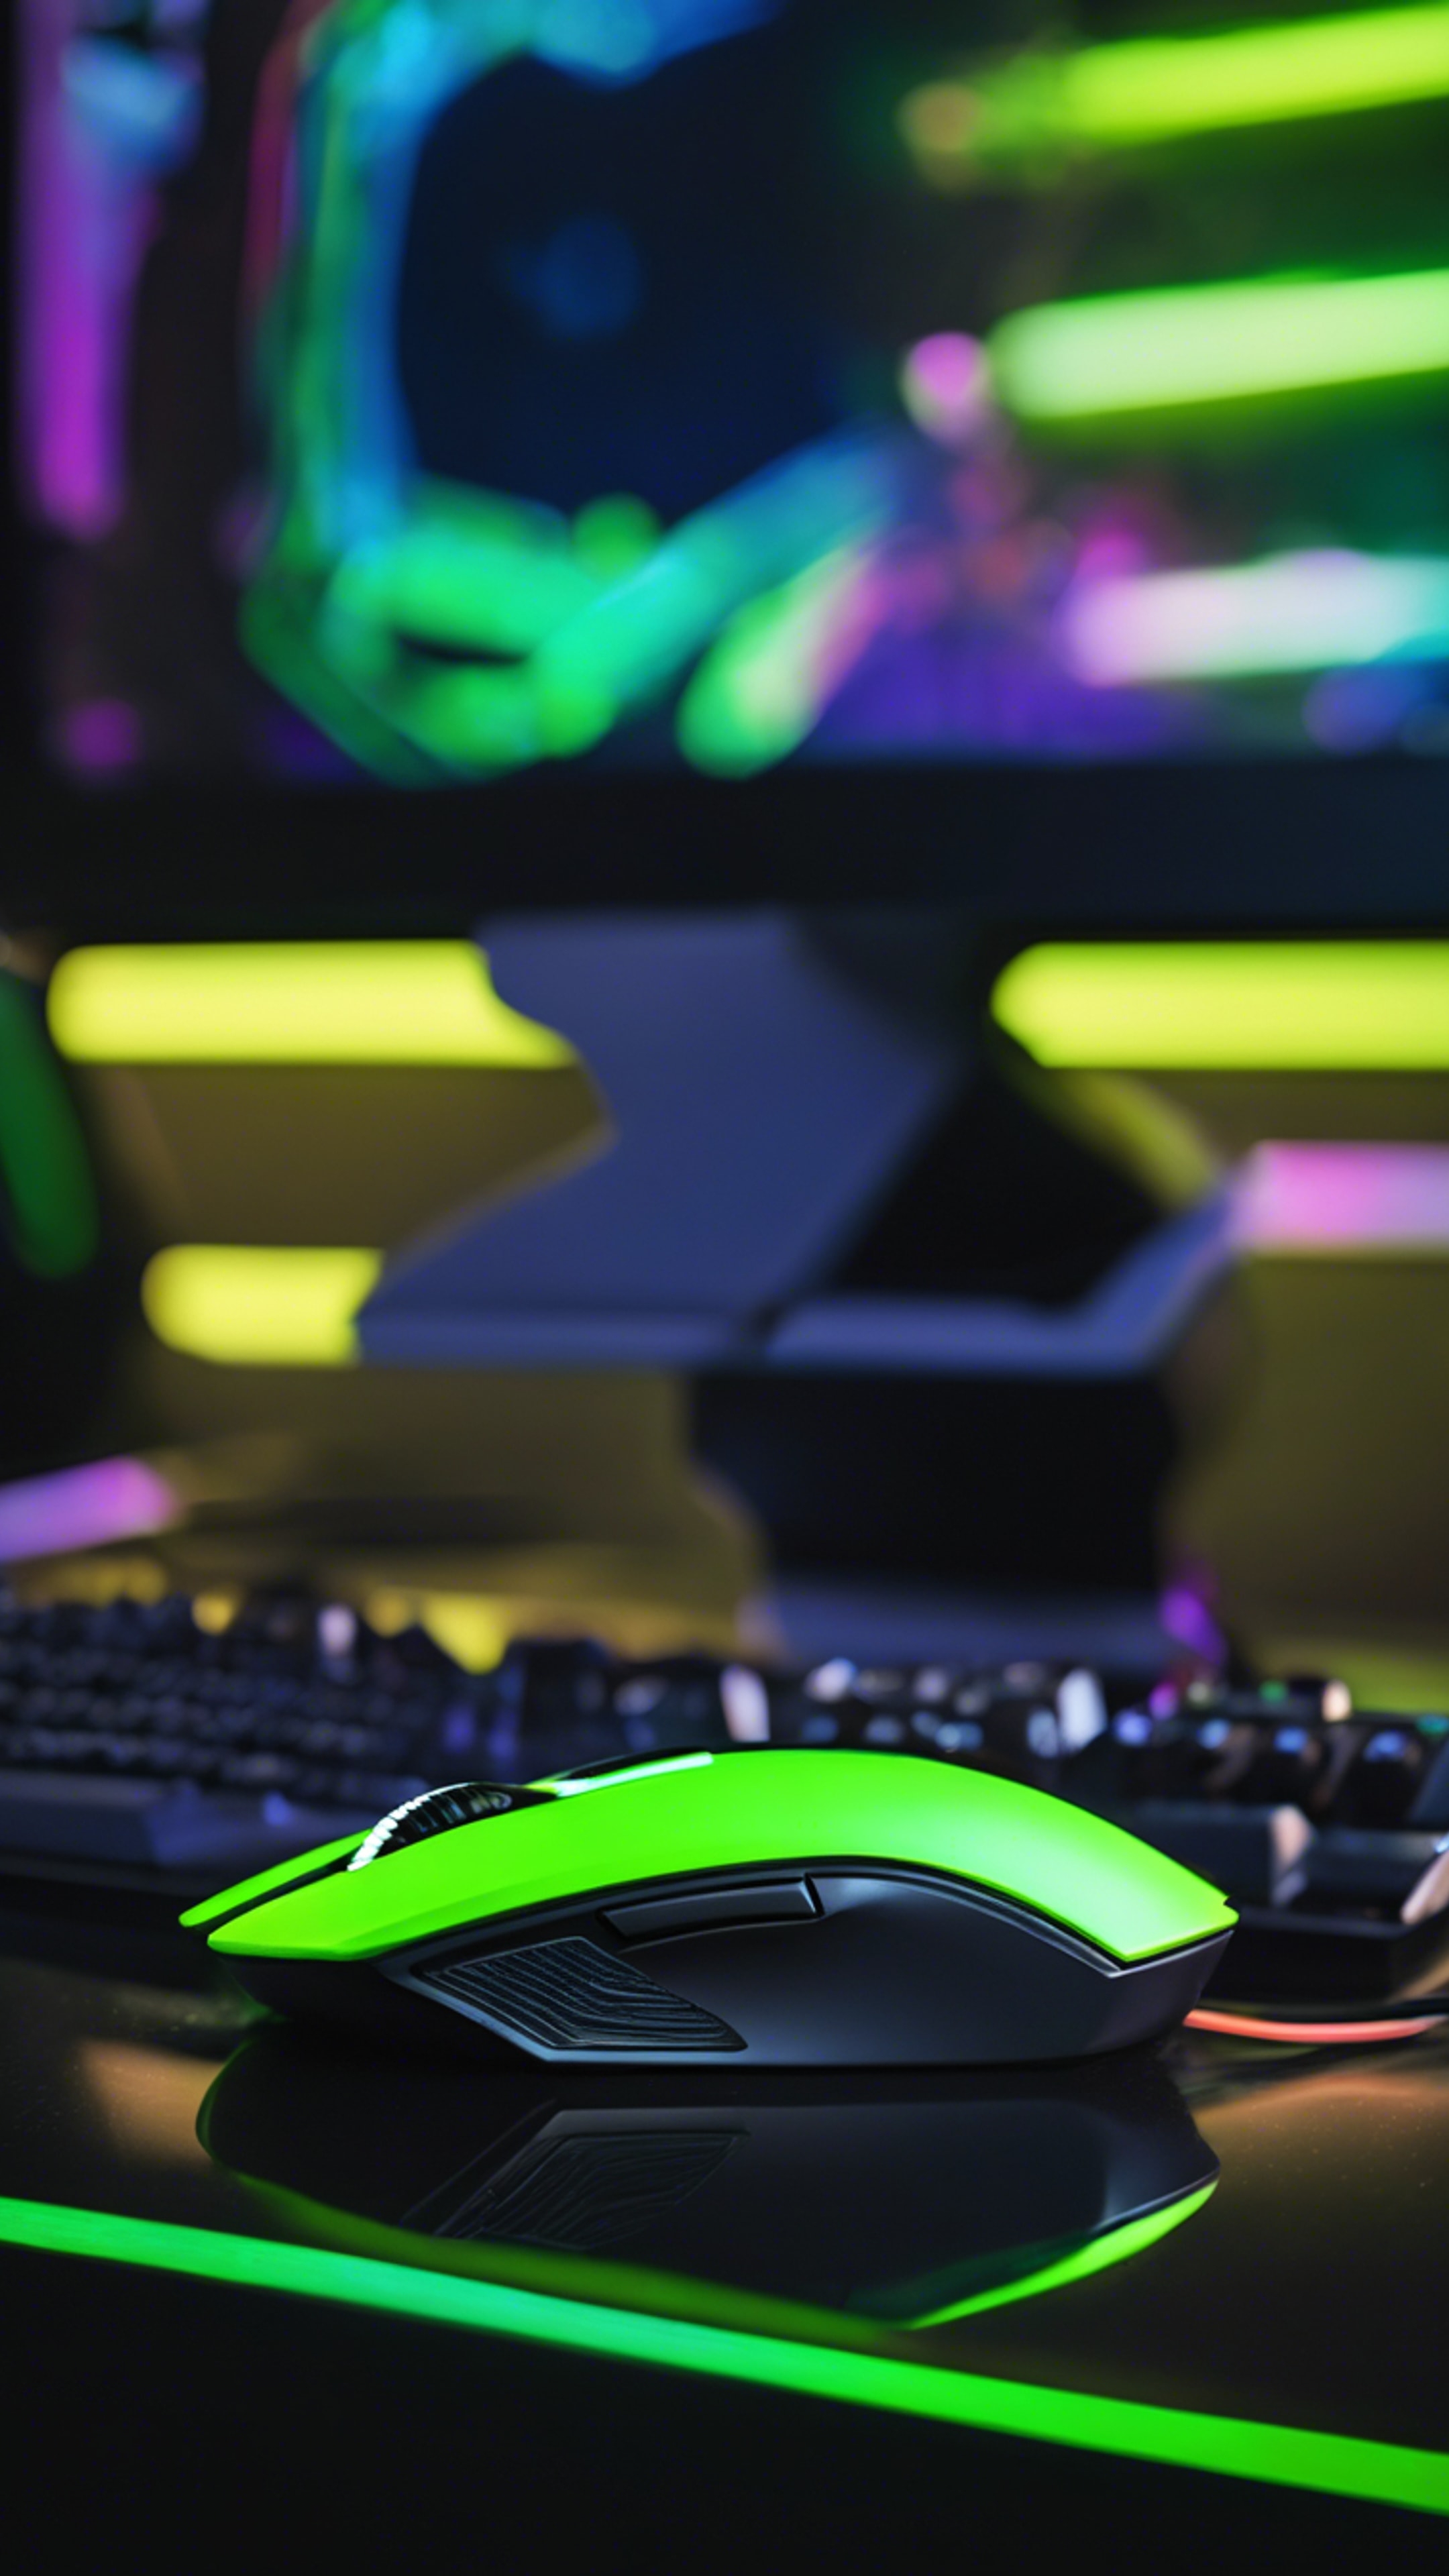 A cool neon green high-tech gaming mouse on a futuristic black desk setup. Обои[6d2a2b9049aa4c81a995]